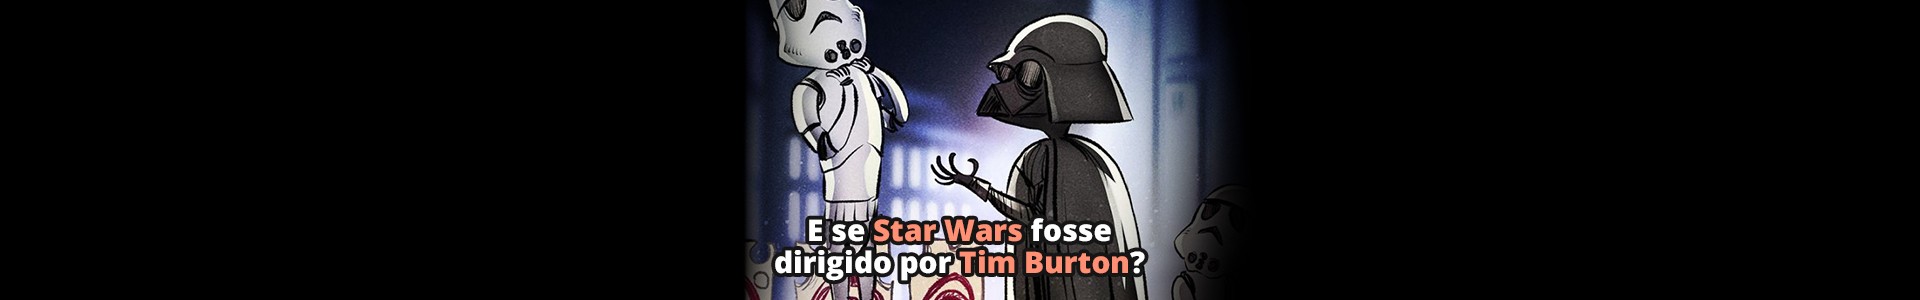 Como seria Star Wars se fosse dirigido por Tim Burton?